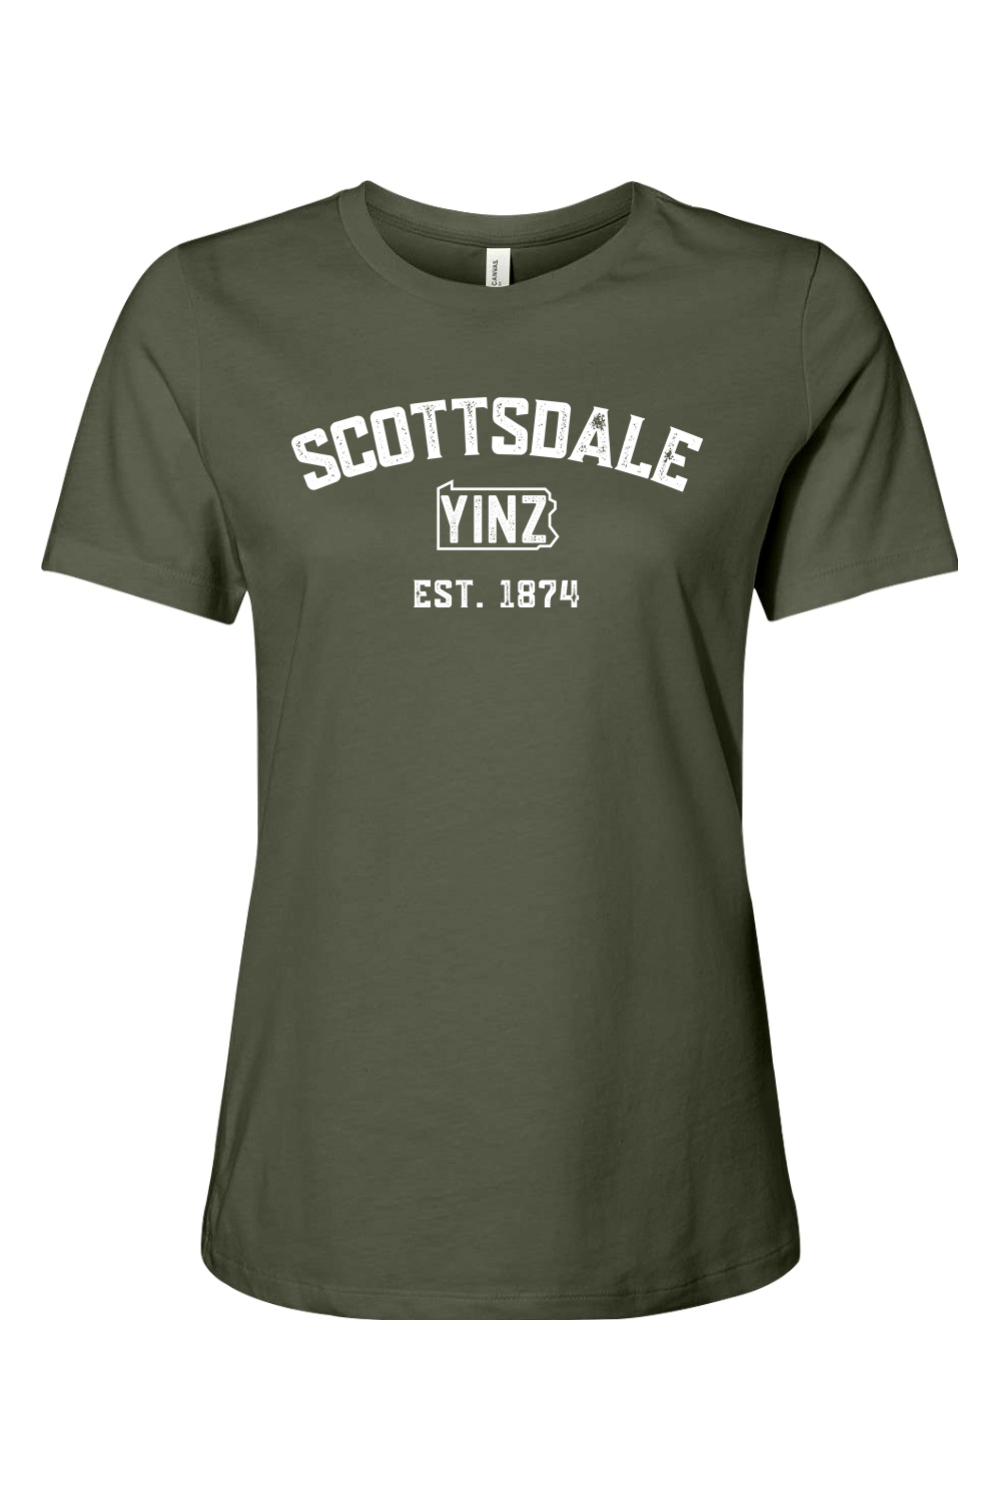 Scottsdale Yinzylvania - Ladies Tee - Yinzylvania